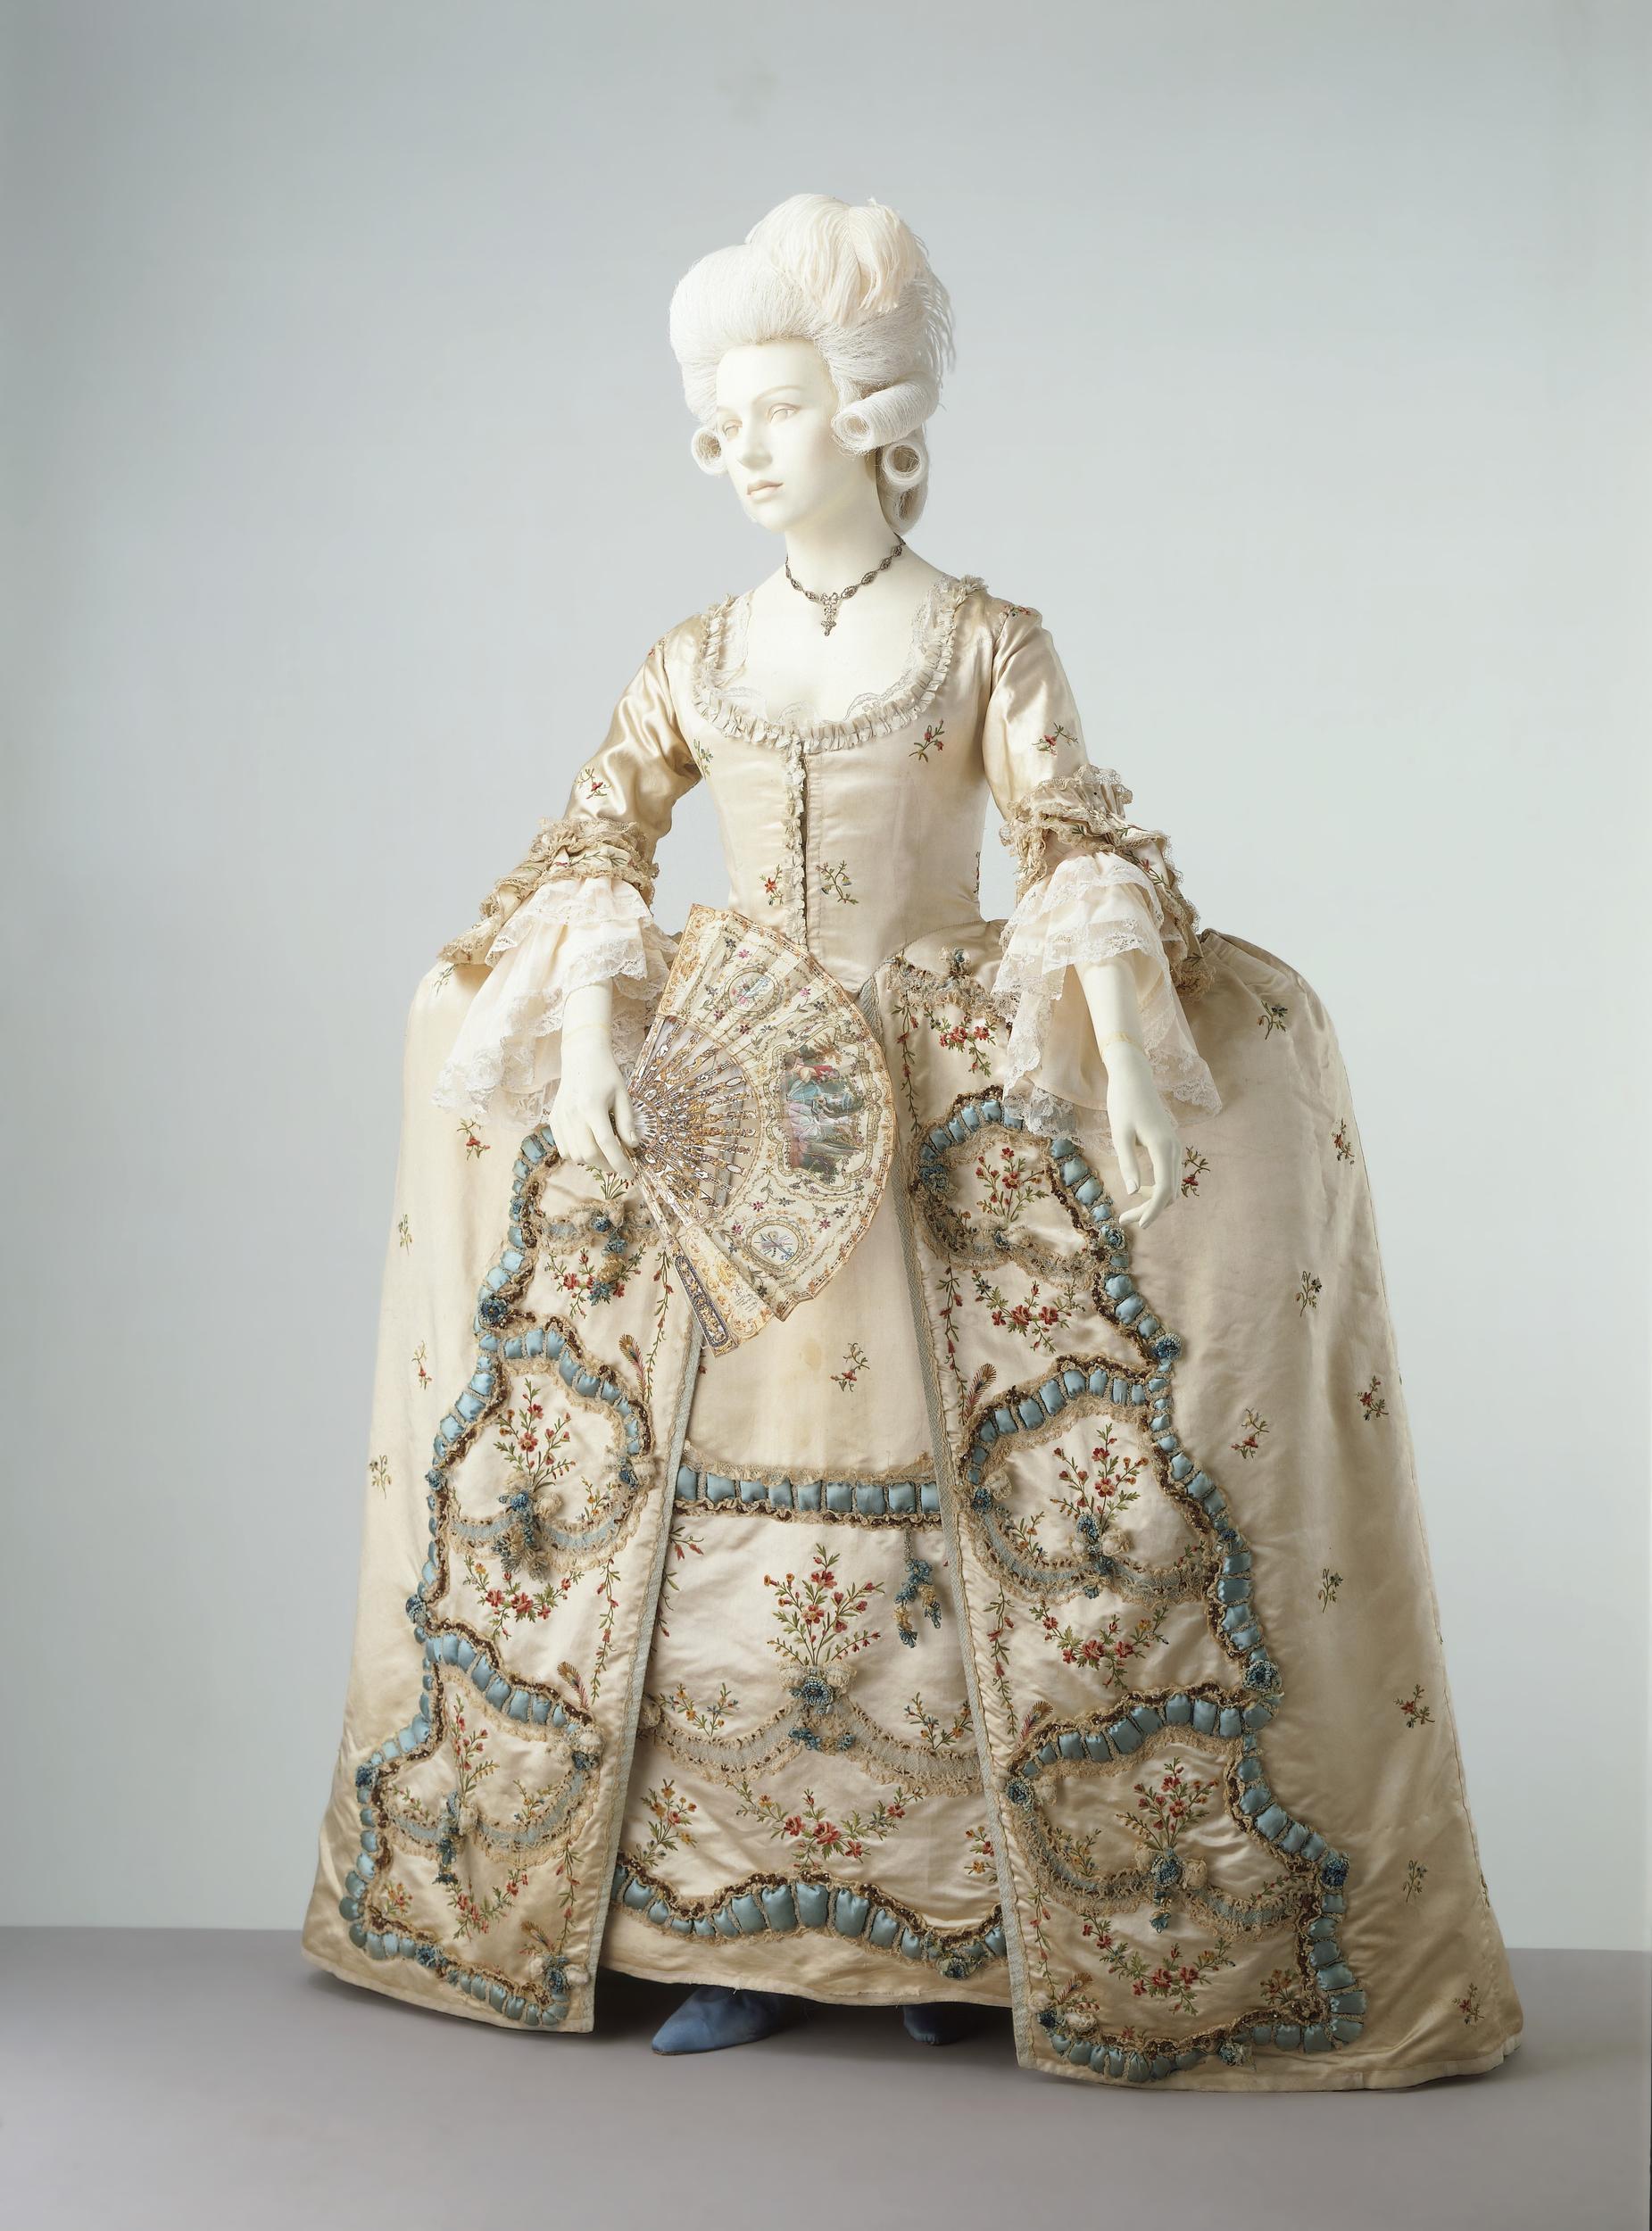 18th century dresses